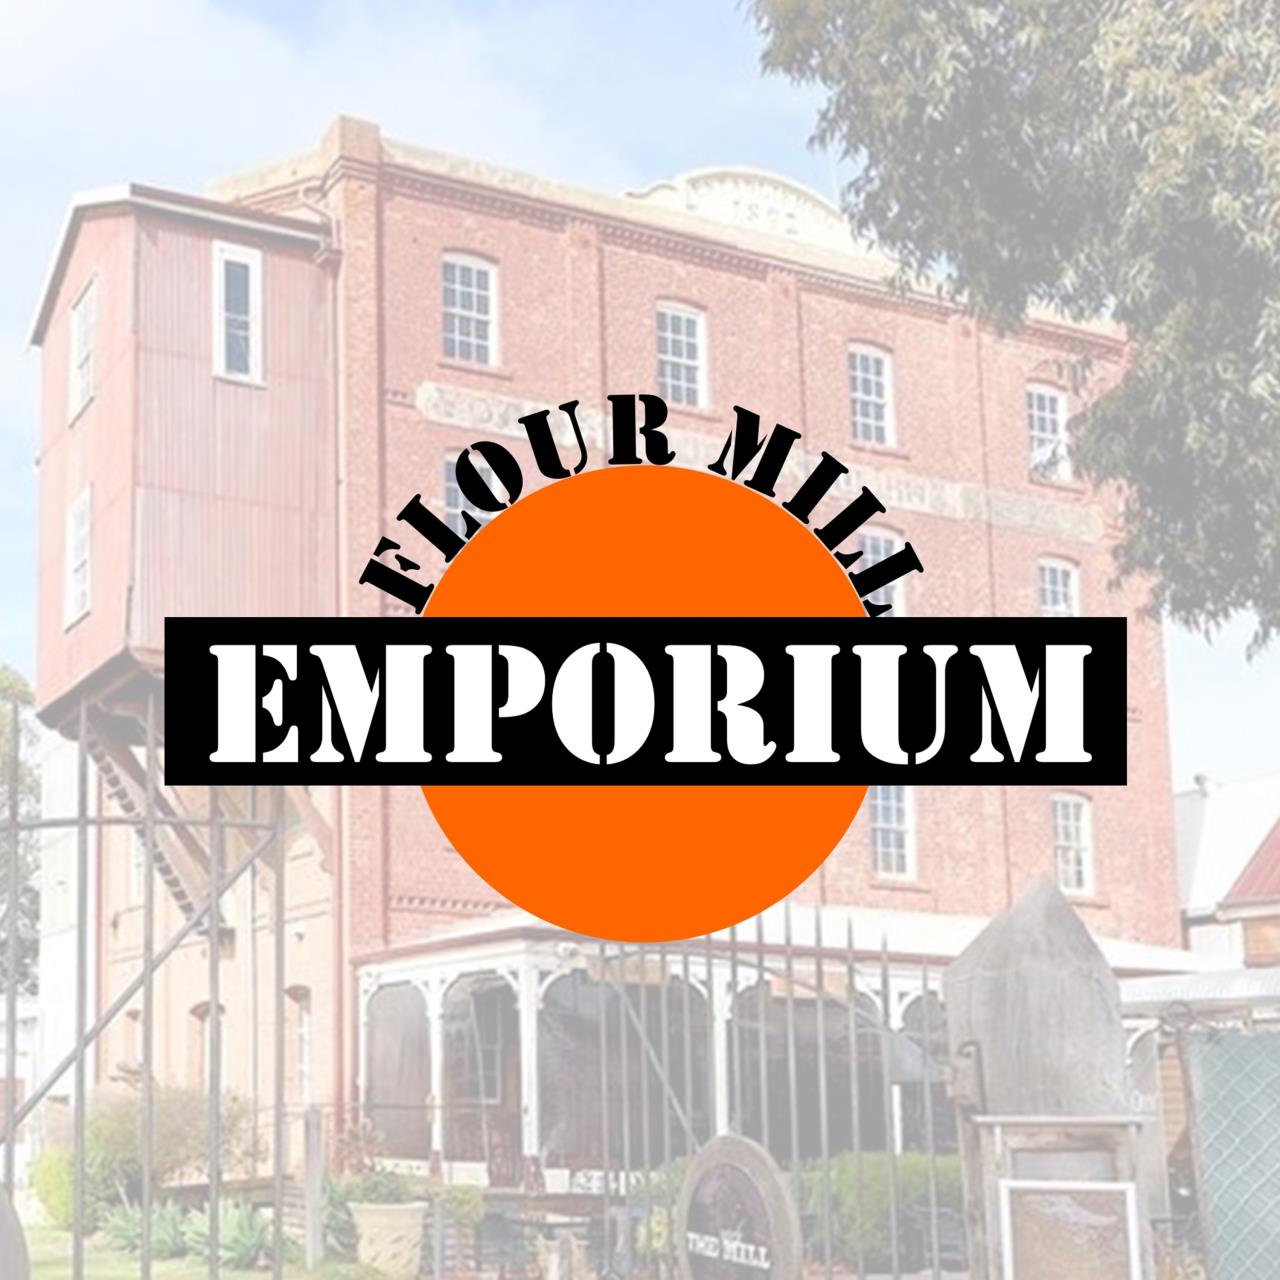 Flour Mill Emporium - Meet The Makers